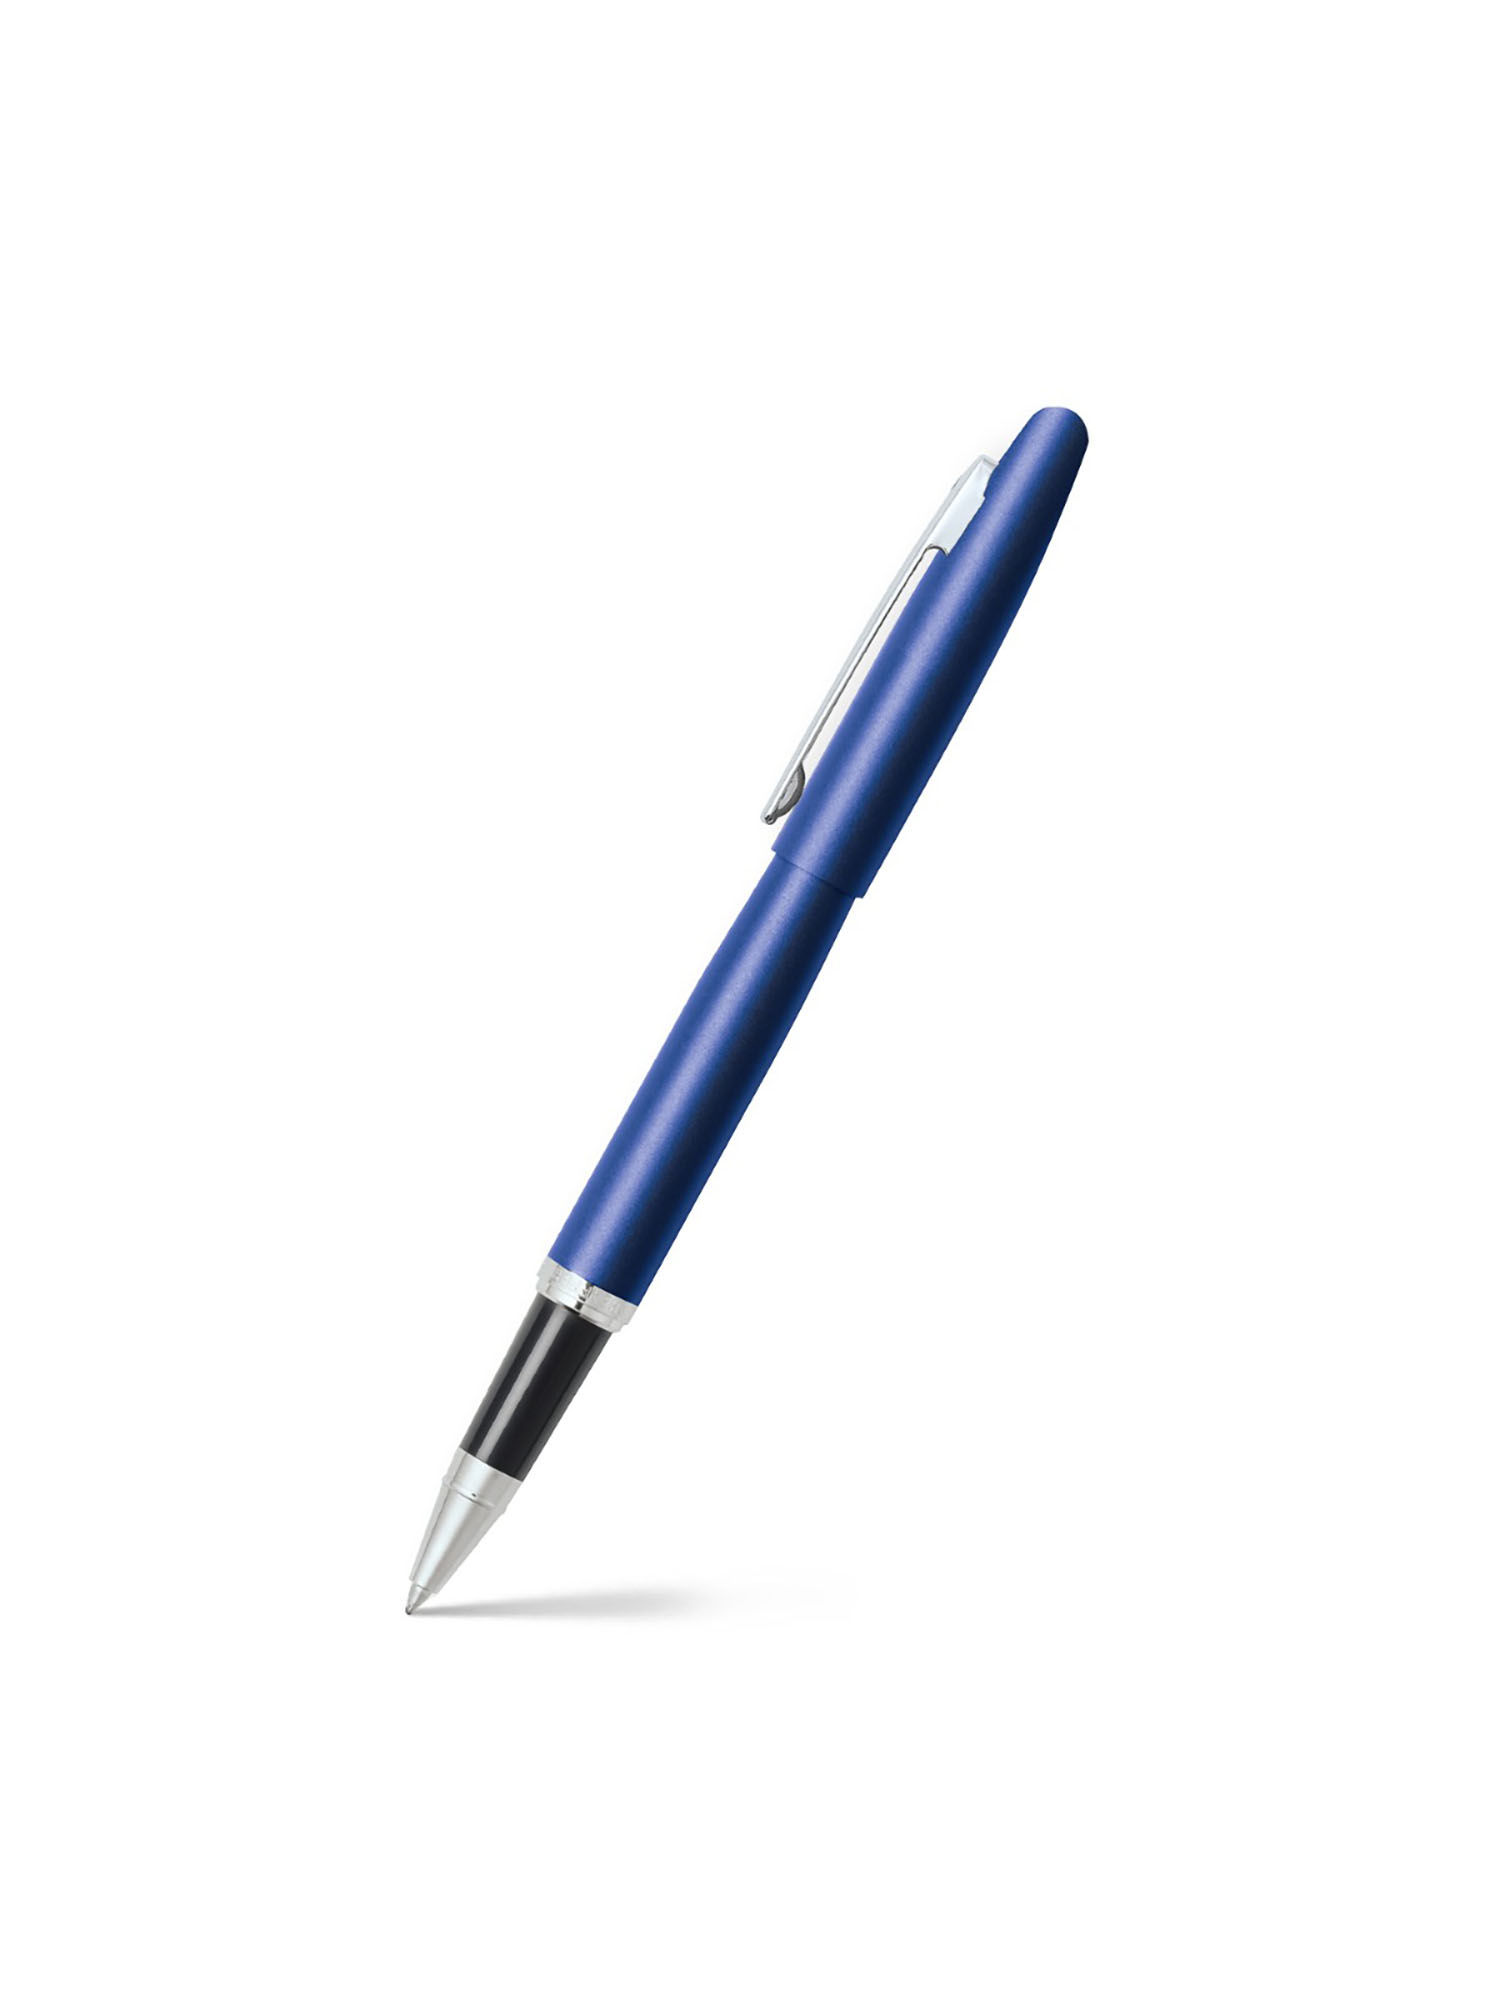 Sheaffer 9401 VFM Rollerball Pen - Neon Blue with Nickel Plated Trim